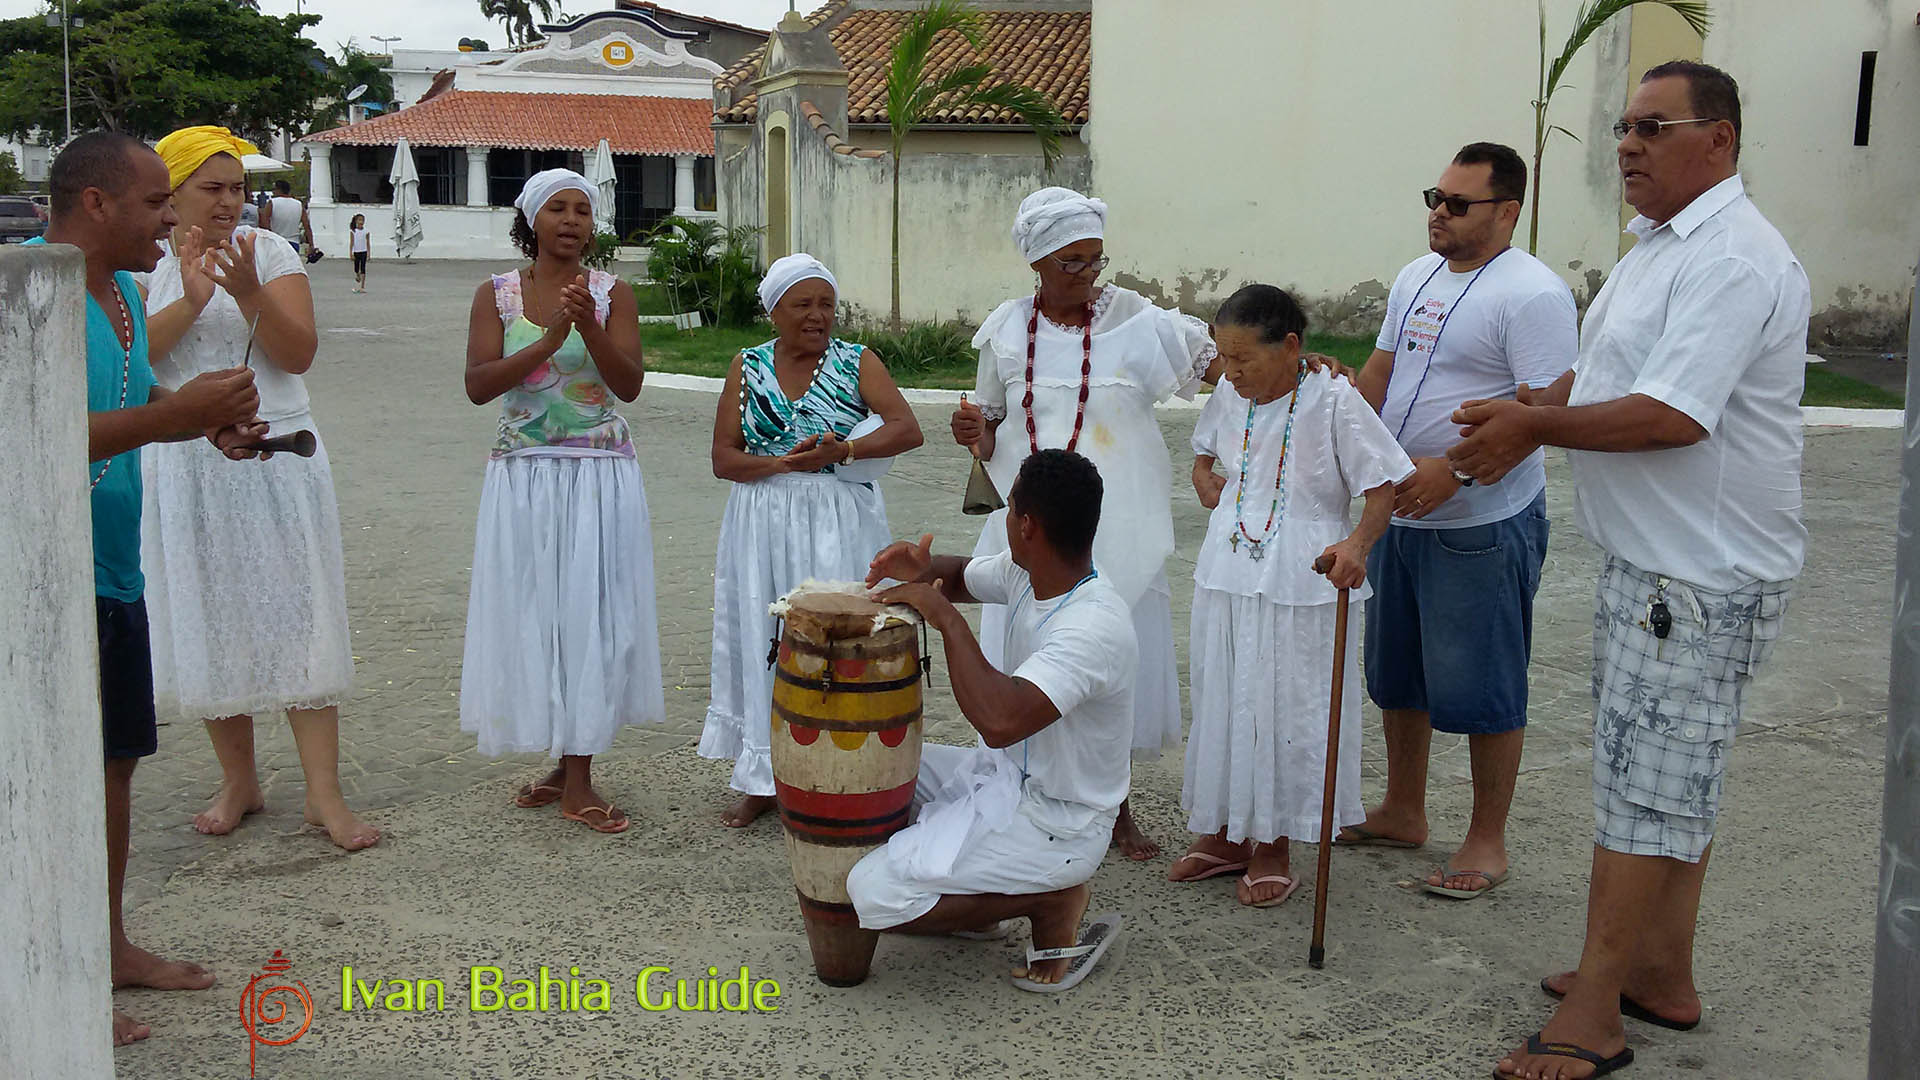 Ivan Bahia Guide, intimate Candomblé ceremonial